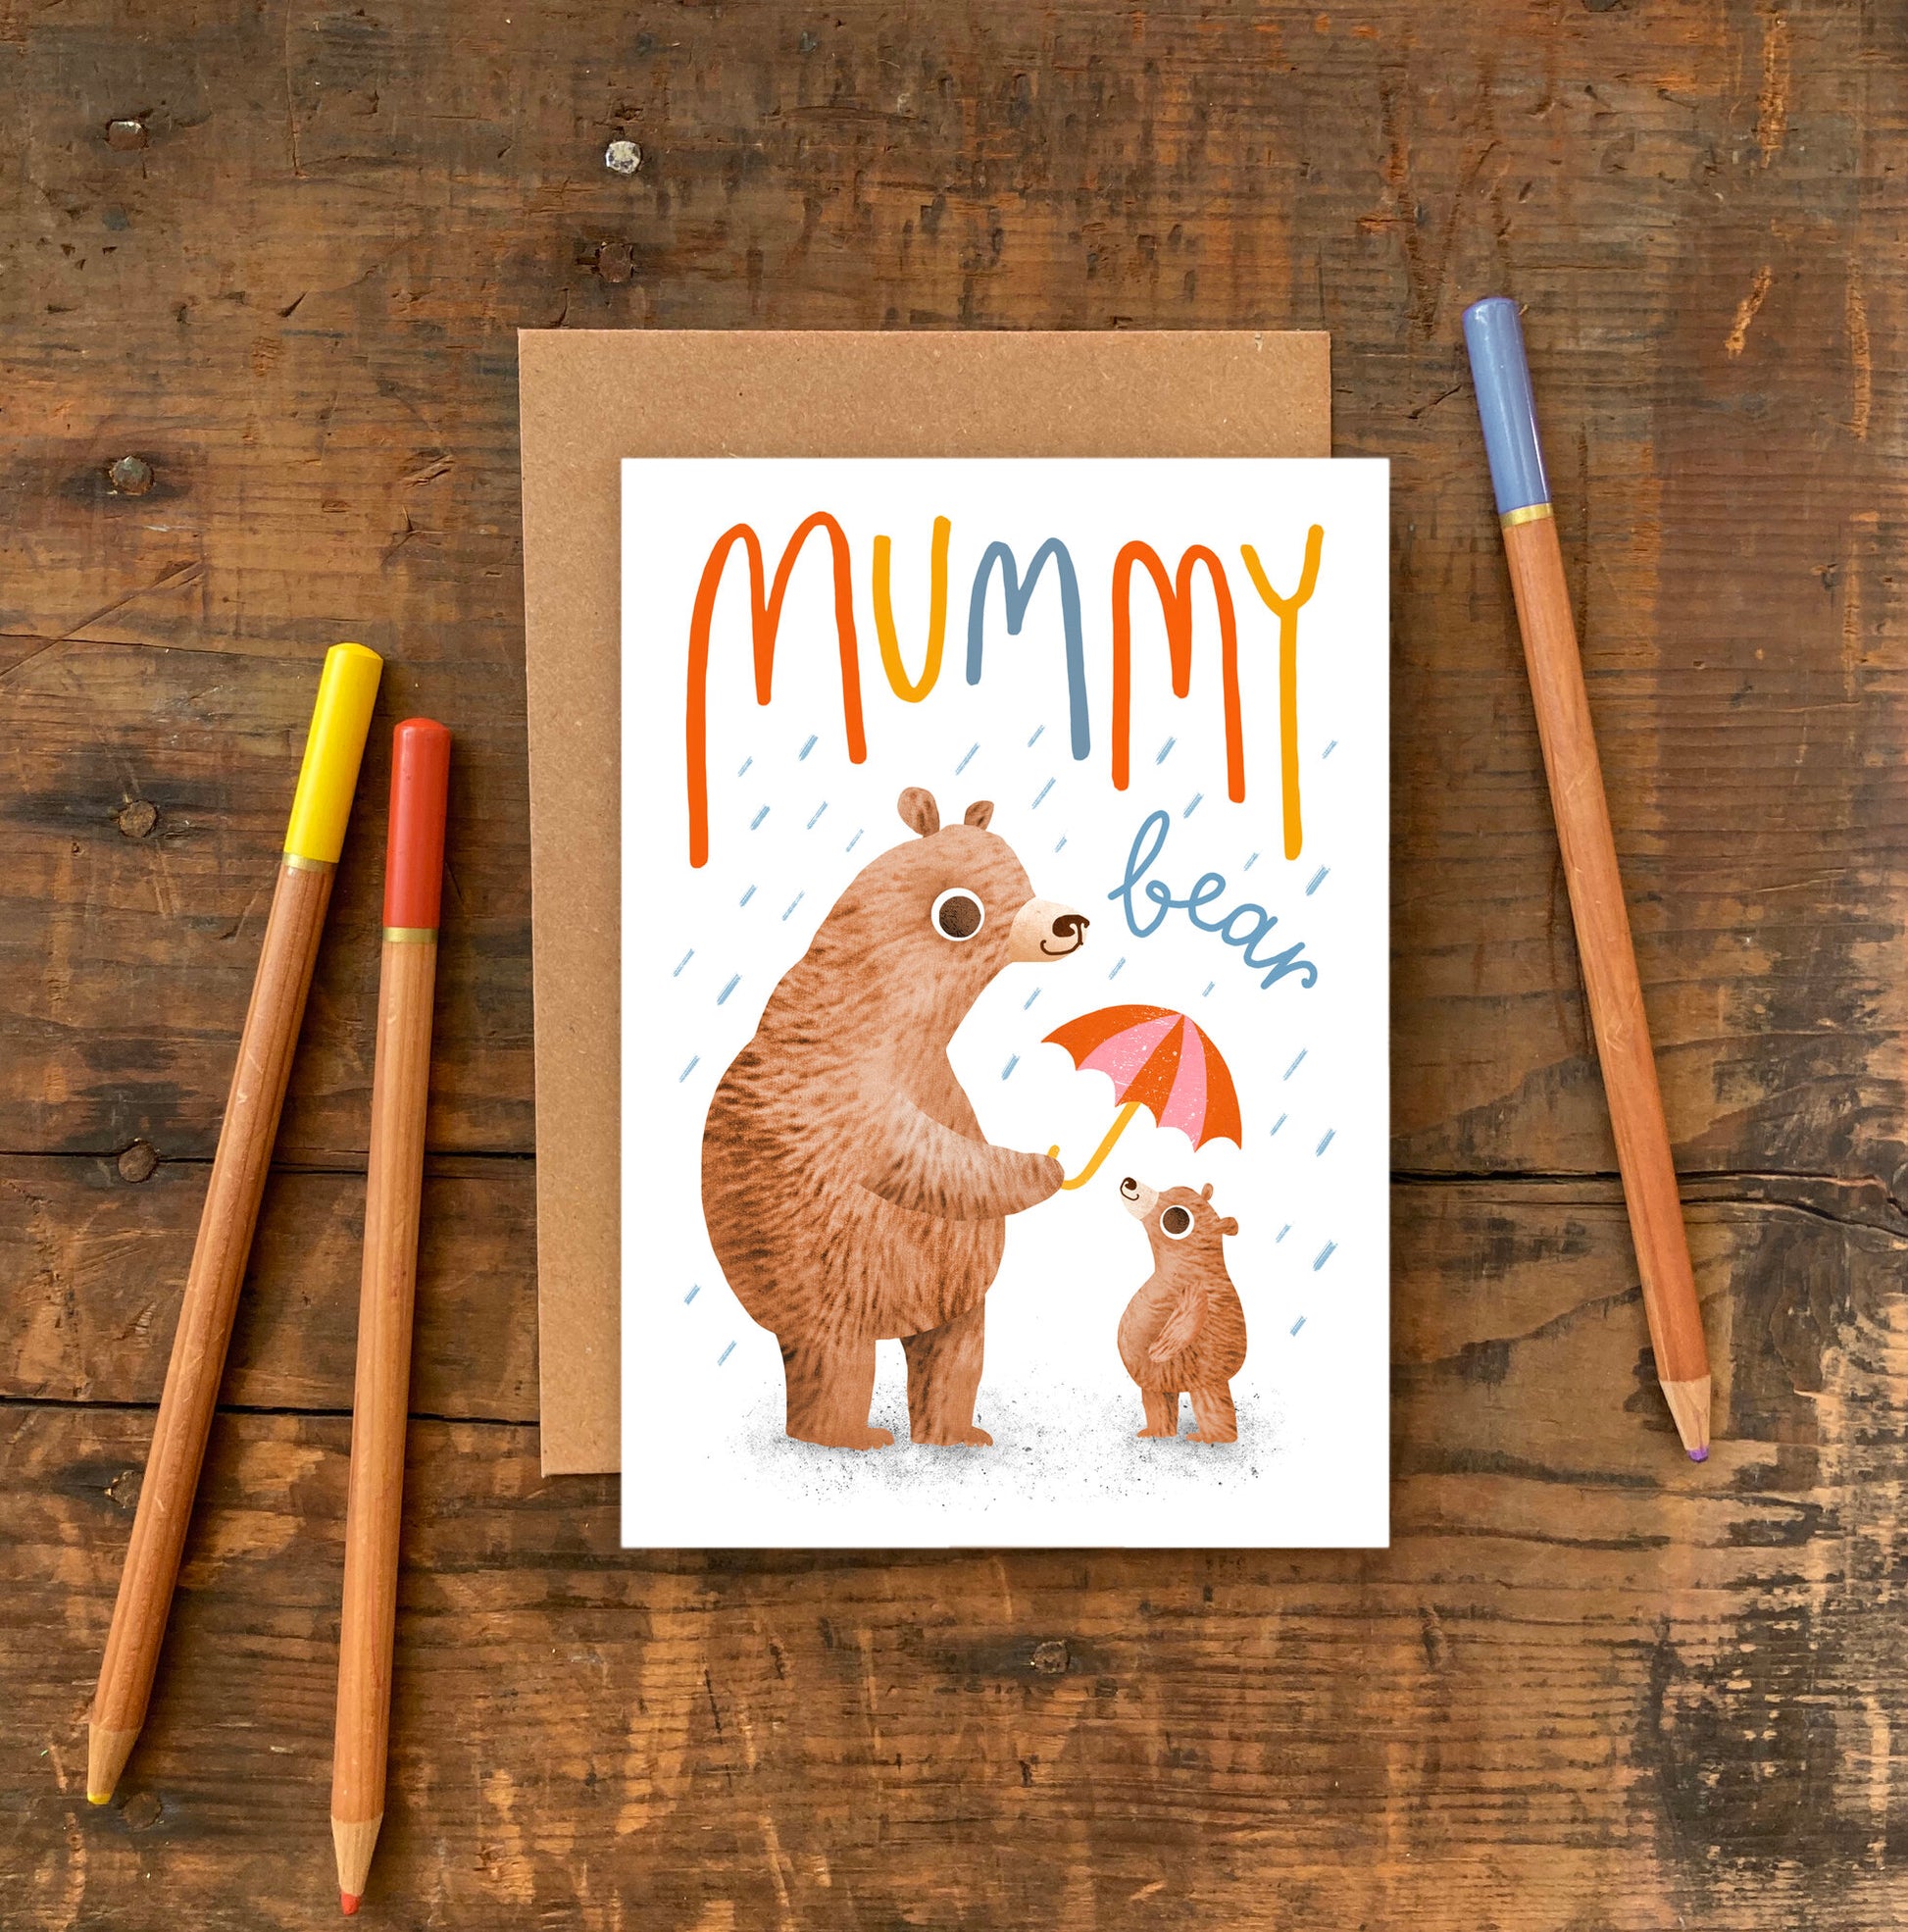 A mummy bear holding an umbrella over a baby bear illustration . A cute mothers day card.